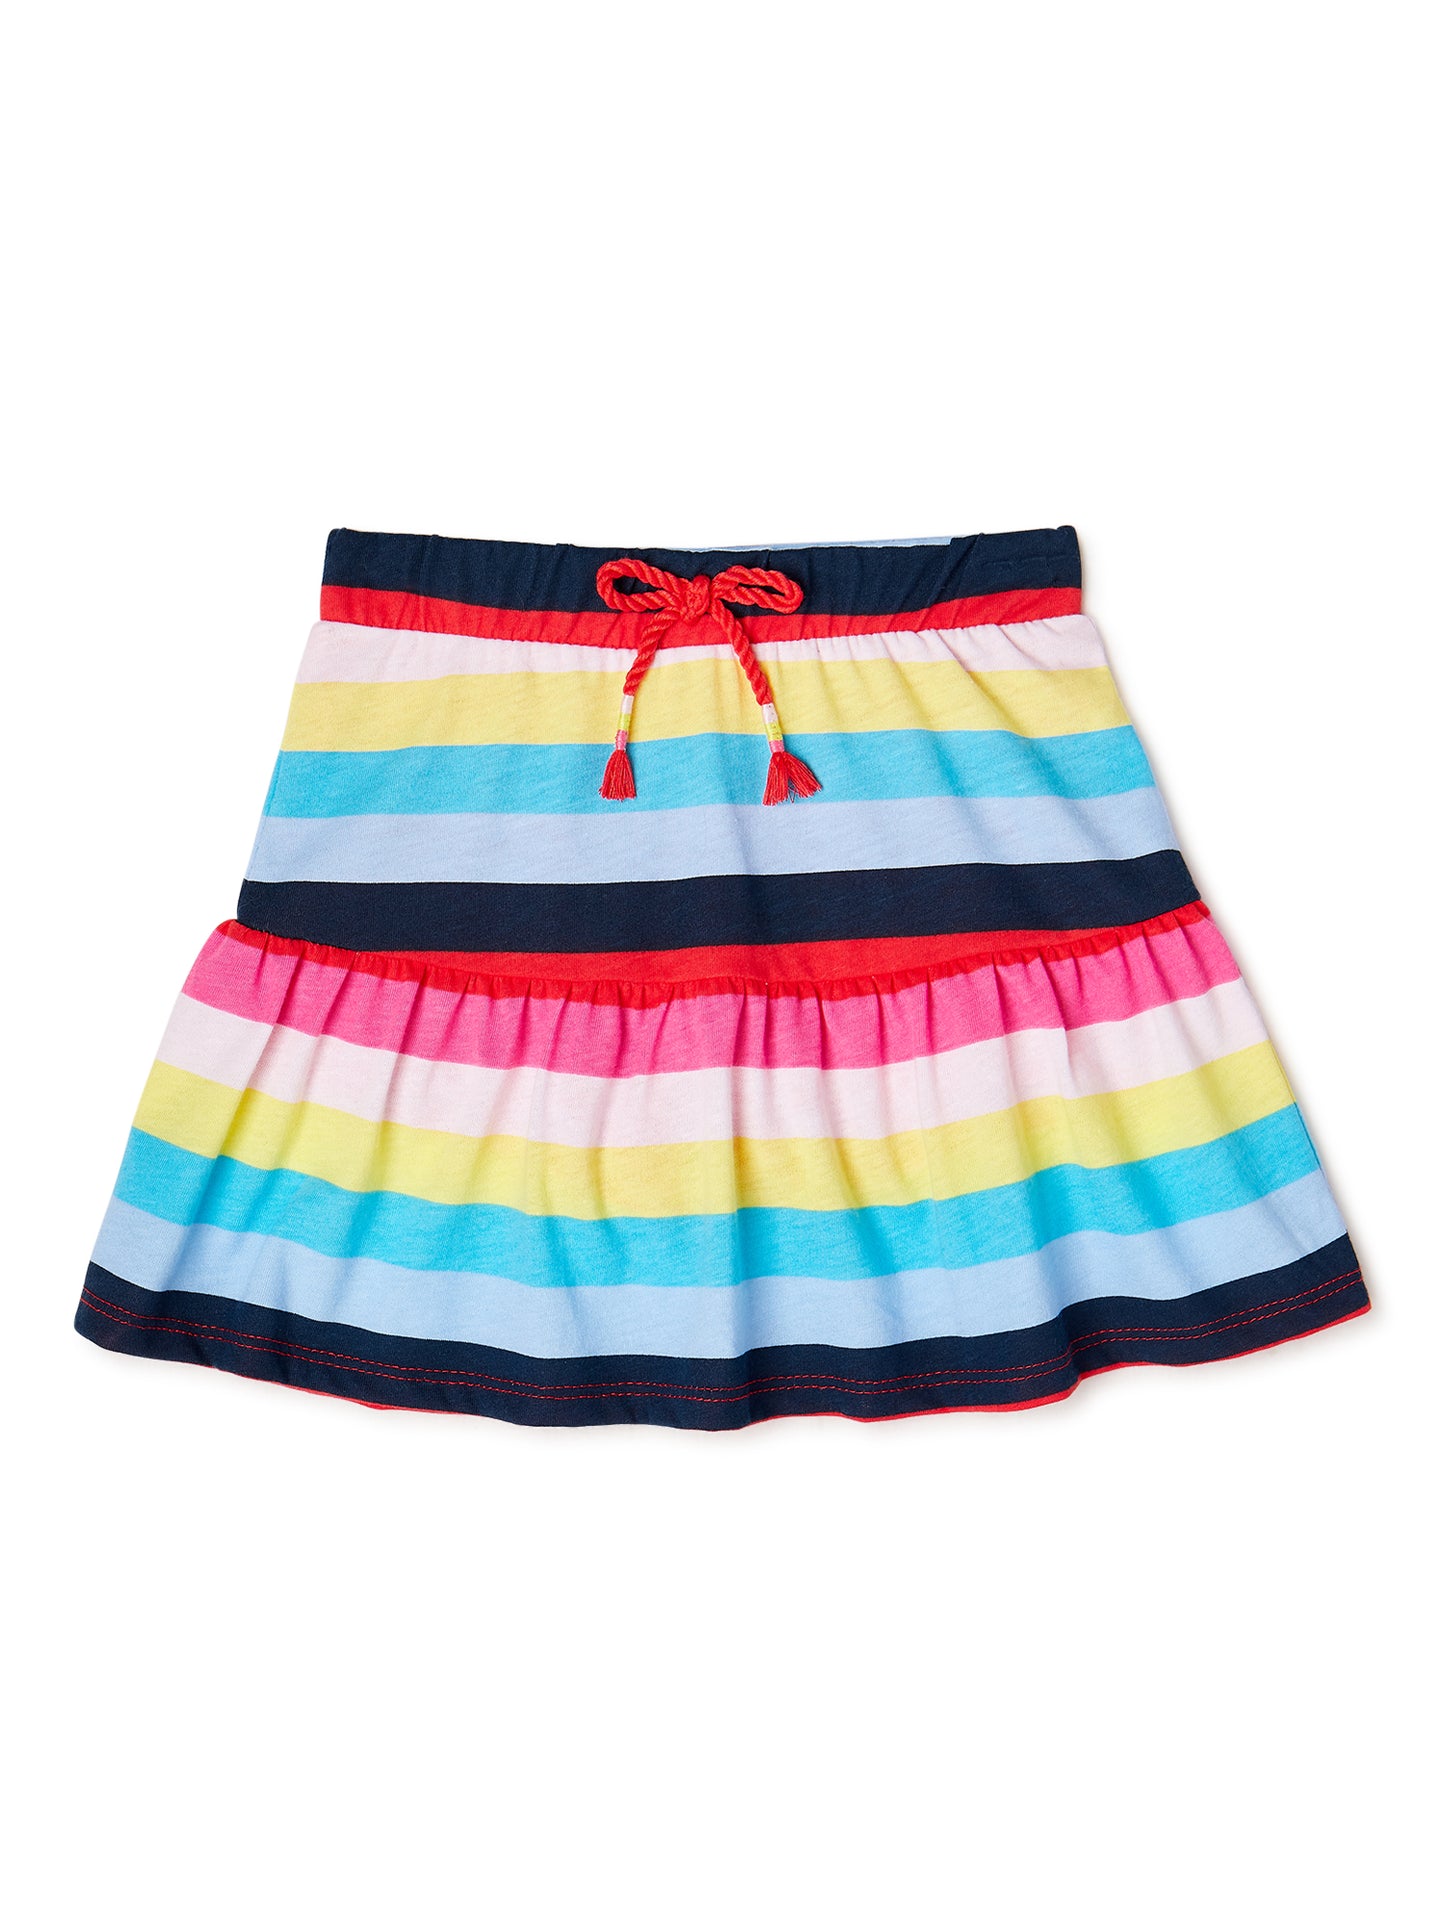 365 Kids from Garanimals Girls Multi Color Striped 2-Tier Scooter Skirt,